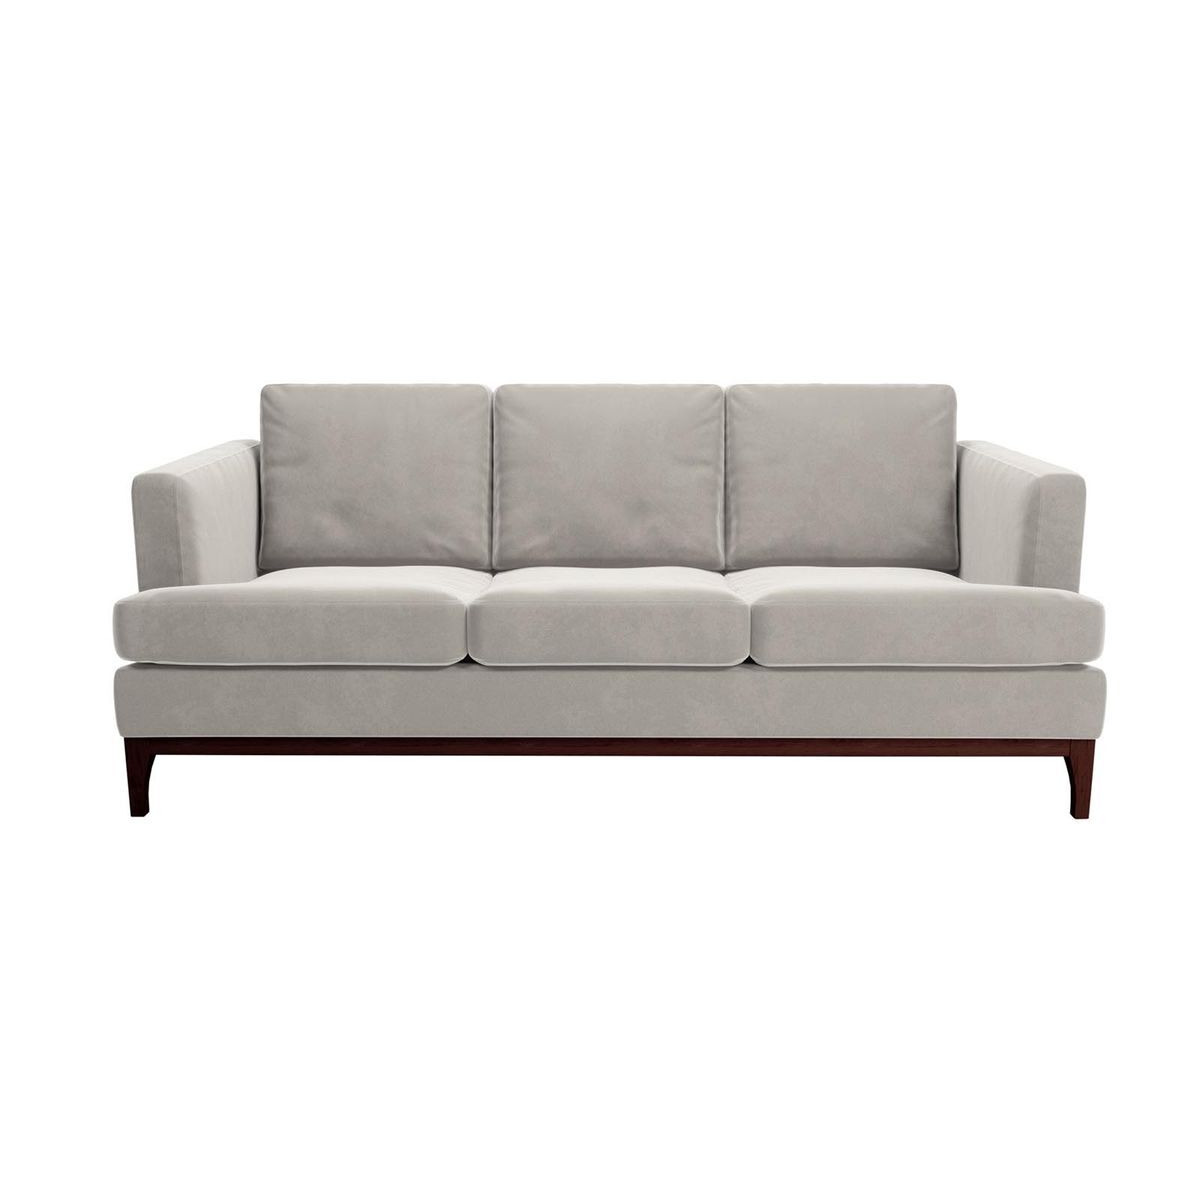 Scarlett 3 Seater Sofa, silver, Leg colour: dark oak - image 1